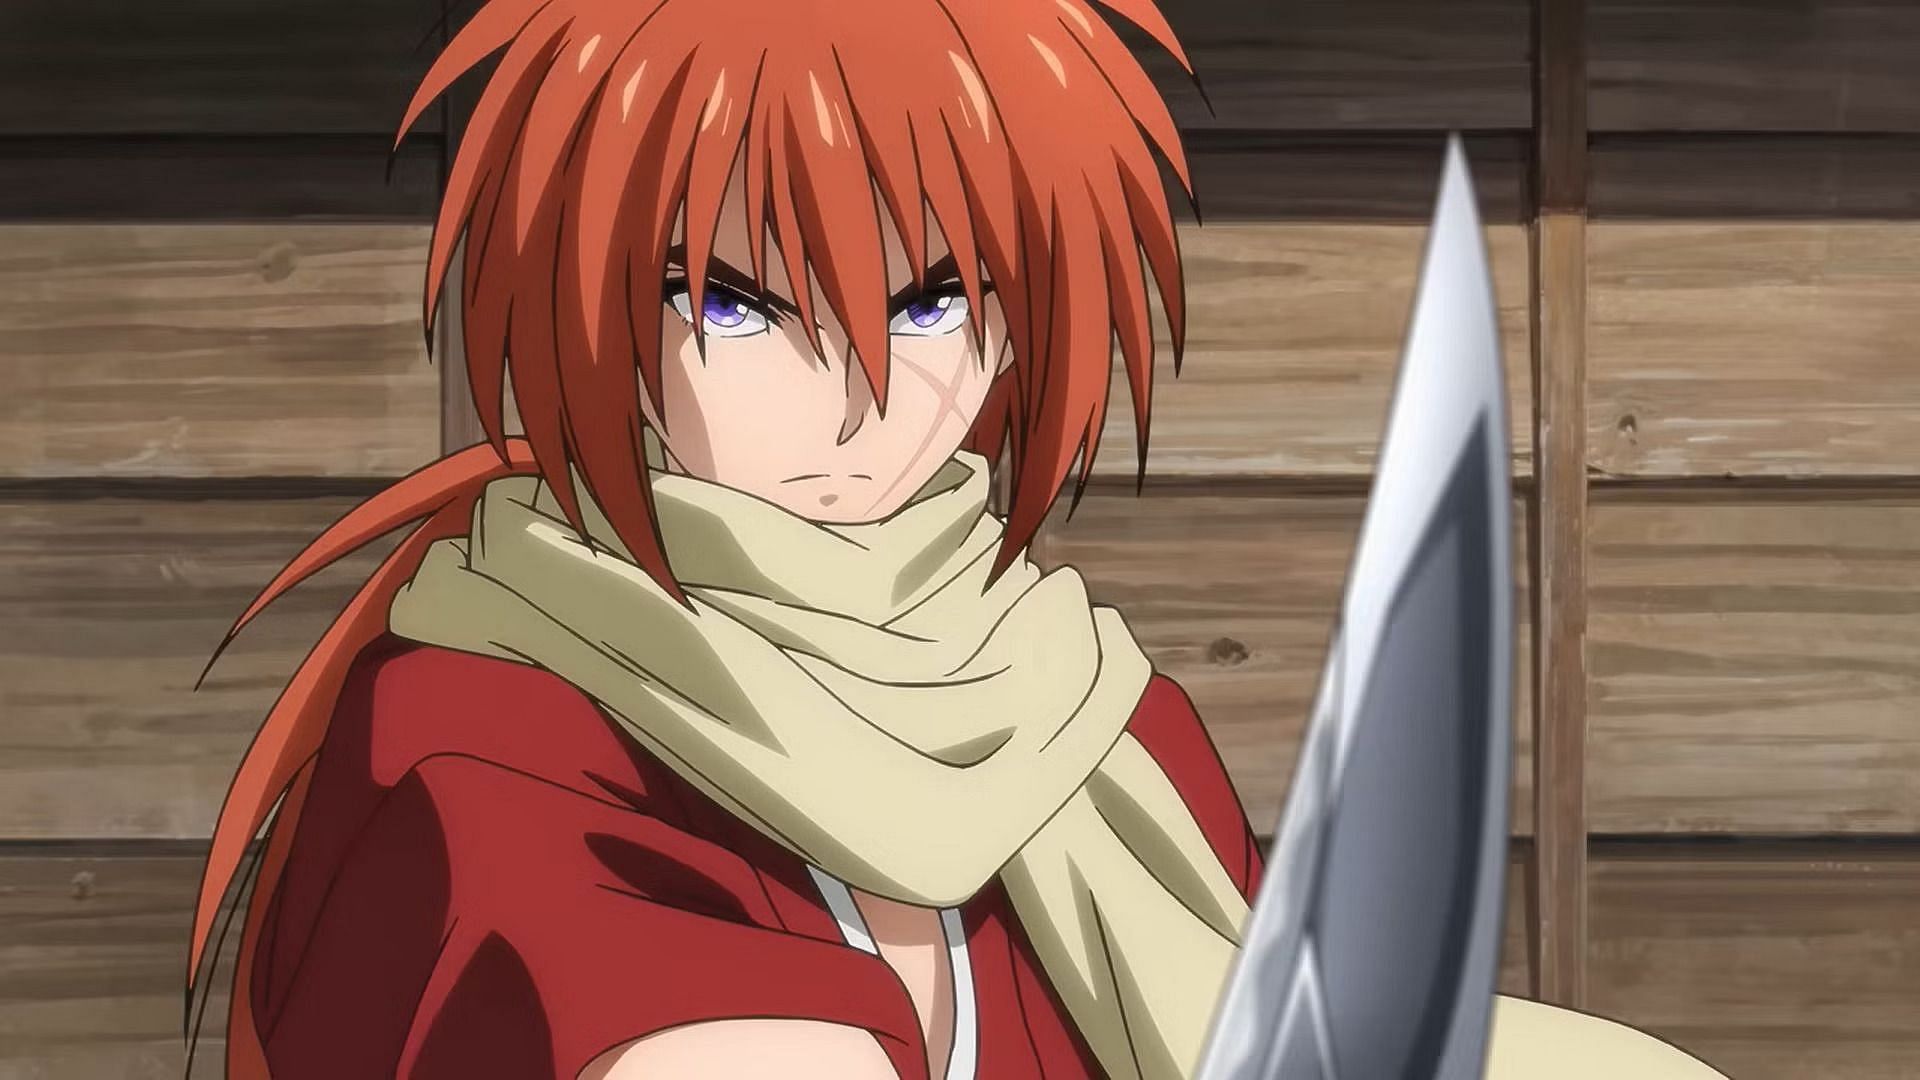 Rurouni Kenshin episode 2: Himura's past comes back after he and Kaoru